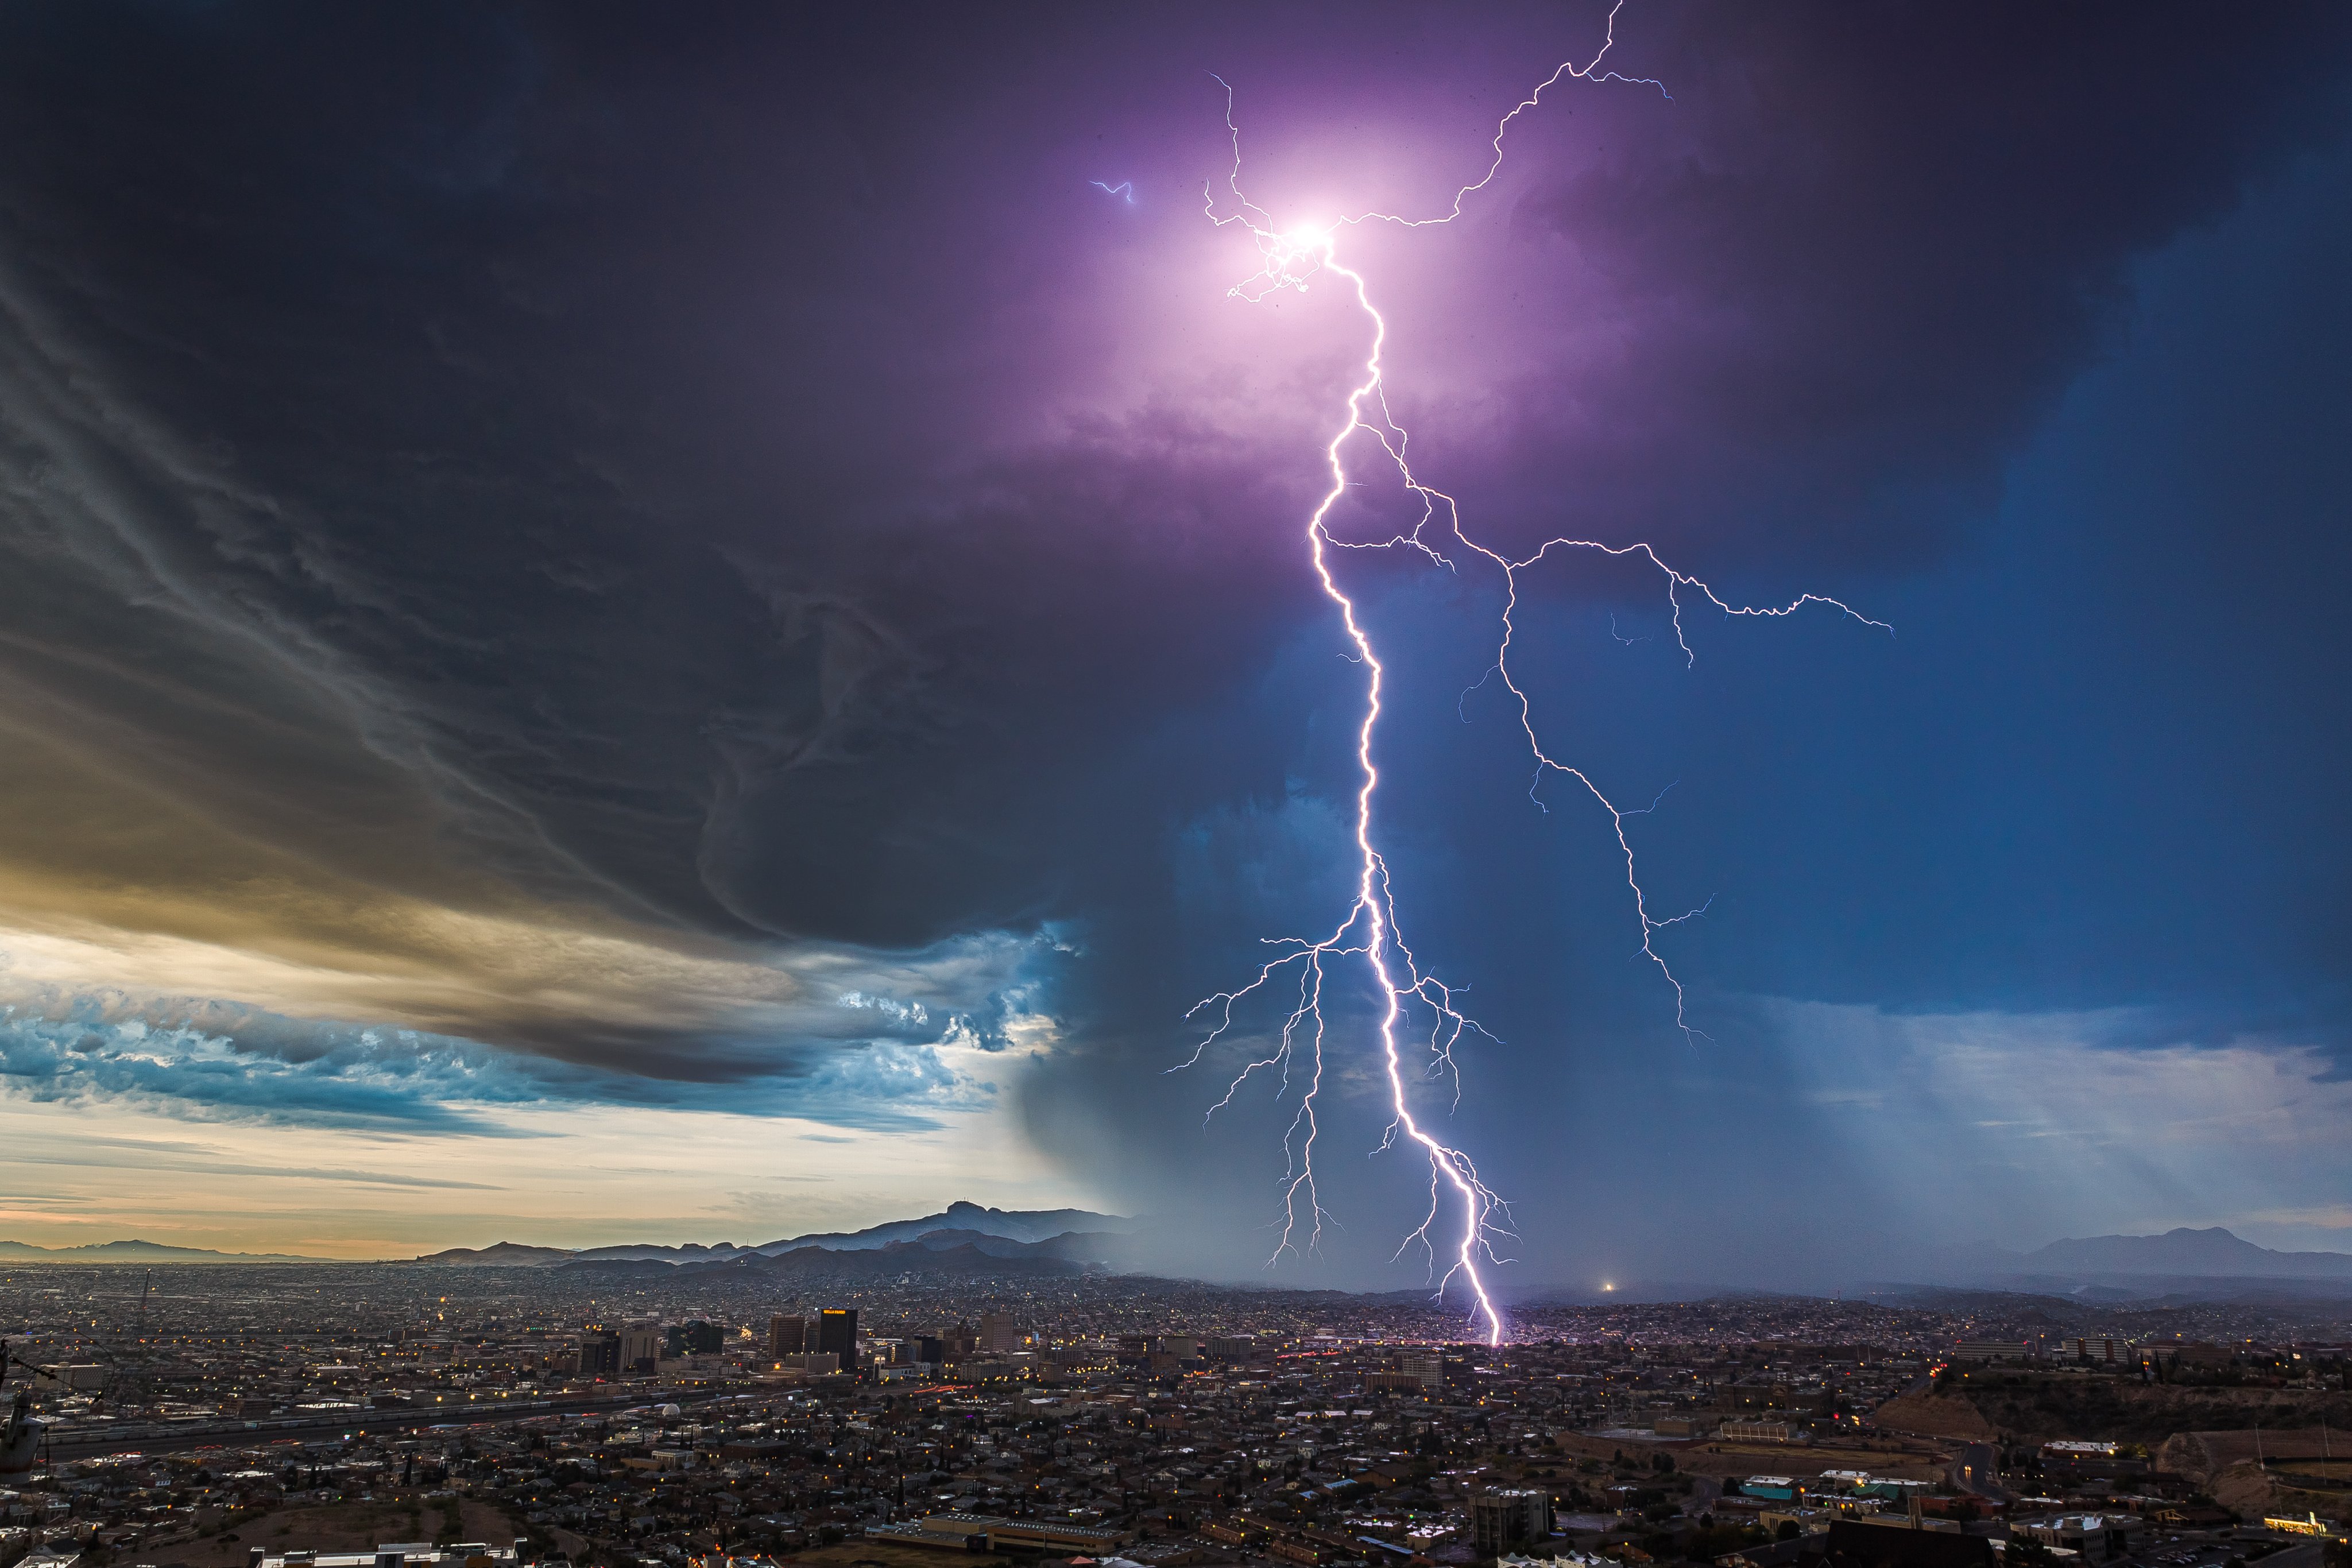 1st Place A rare November thunderstorm rolls north from Ciudad Juarez into El Paso, Texas by Lori Grace Bailey @lorigraceaz